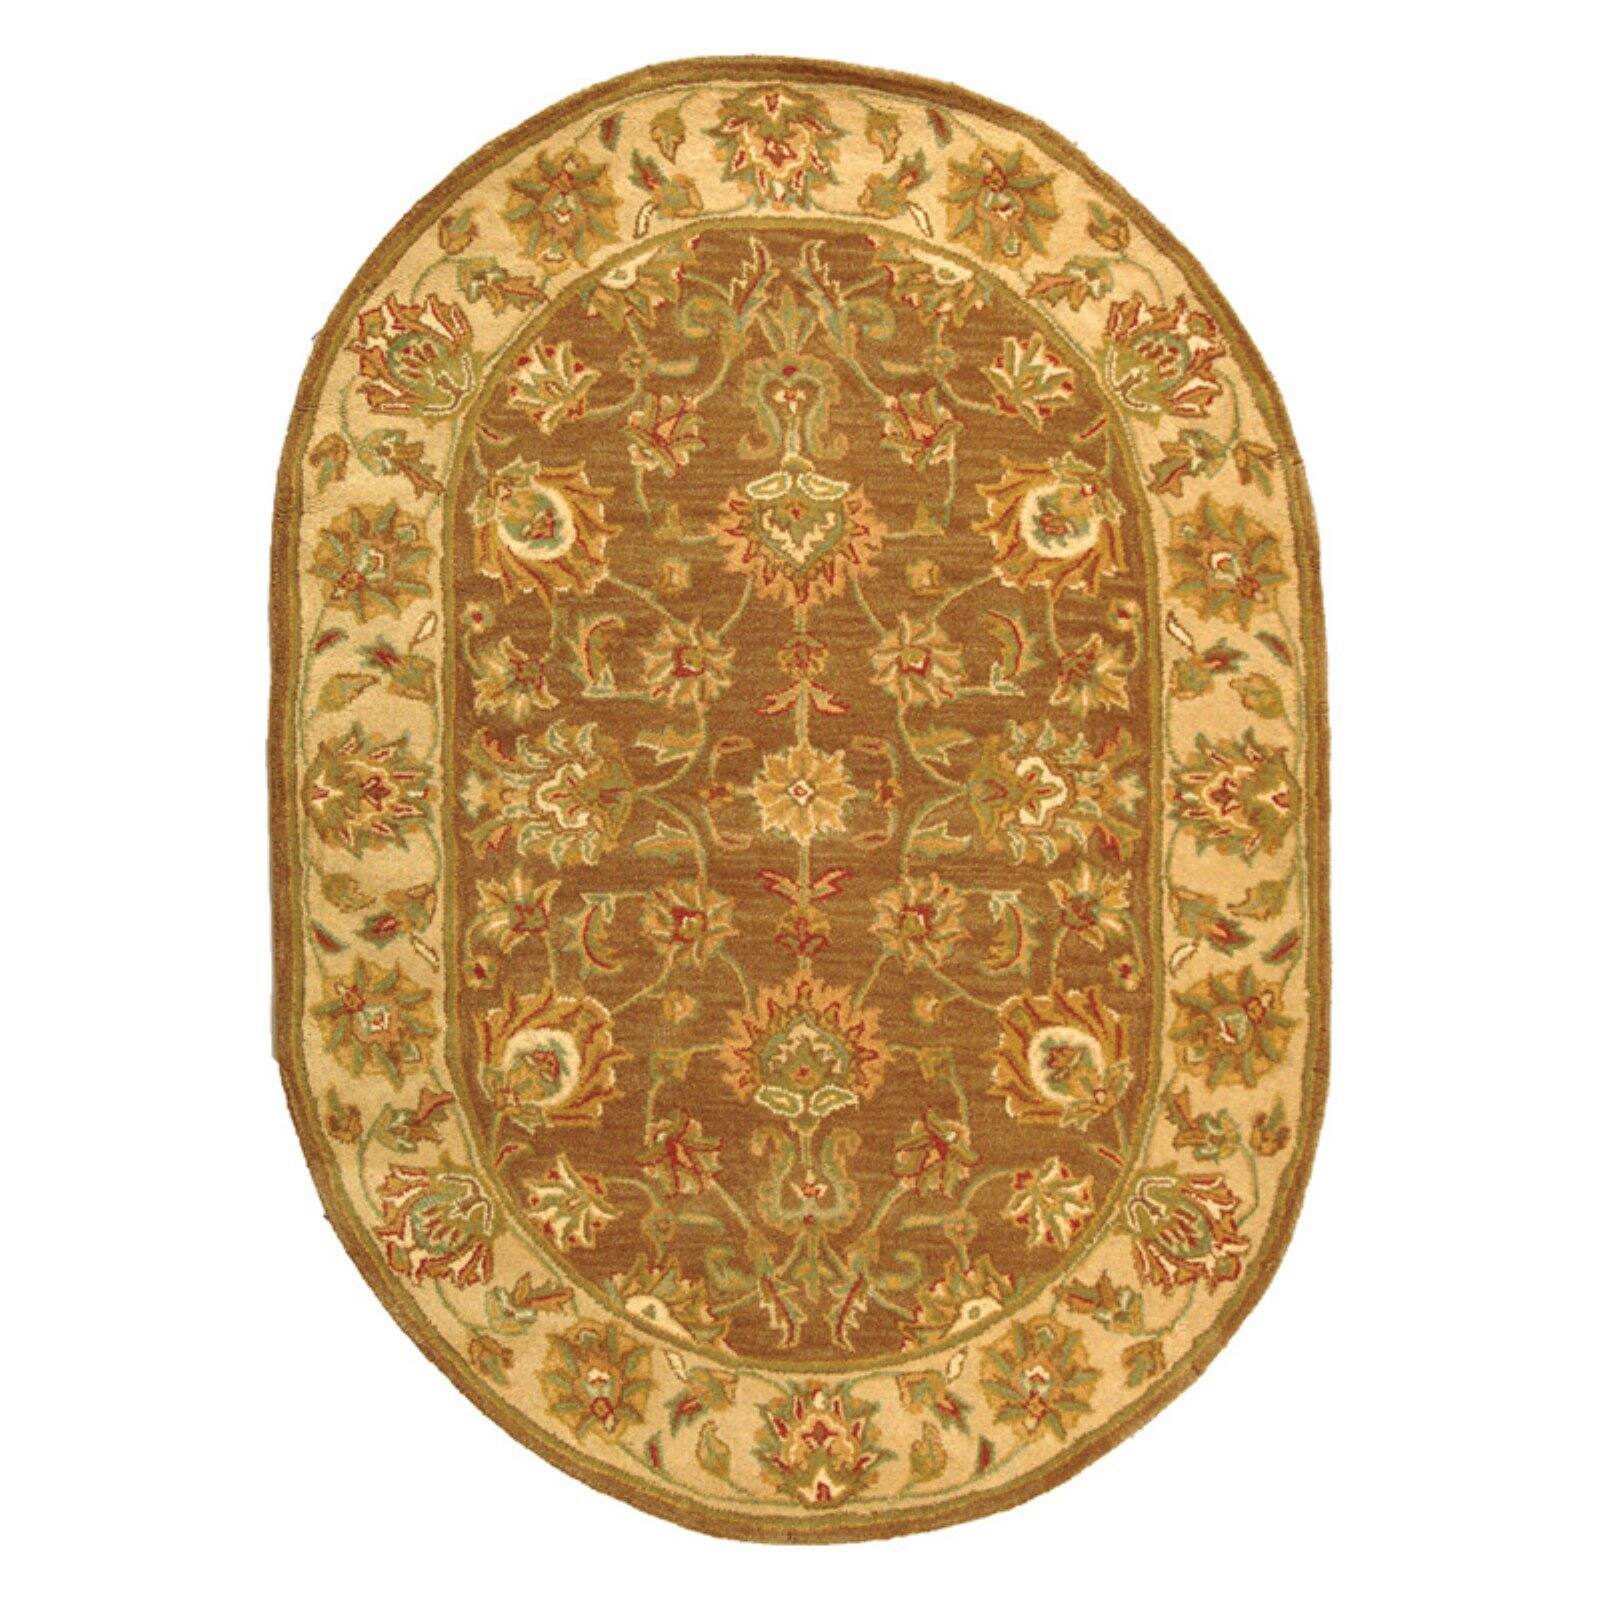 SAFAVIEH Heritage Regis Traditional Wool Area Rug, Brown/Ivory, 9'6" x 13'6" - image 5 of 9